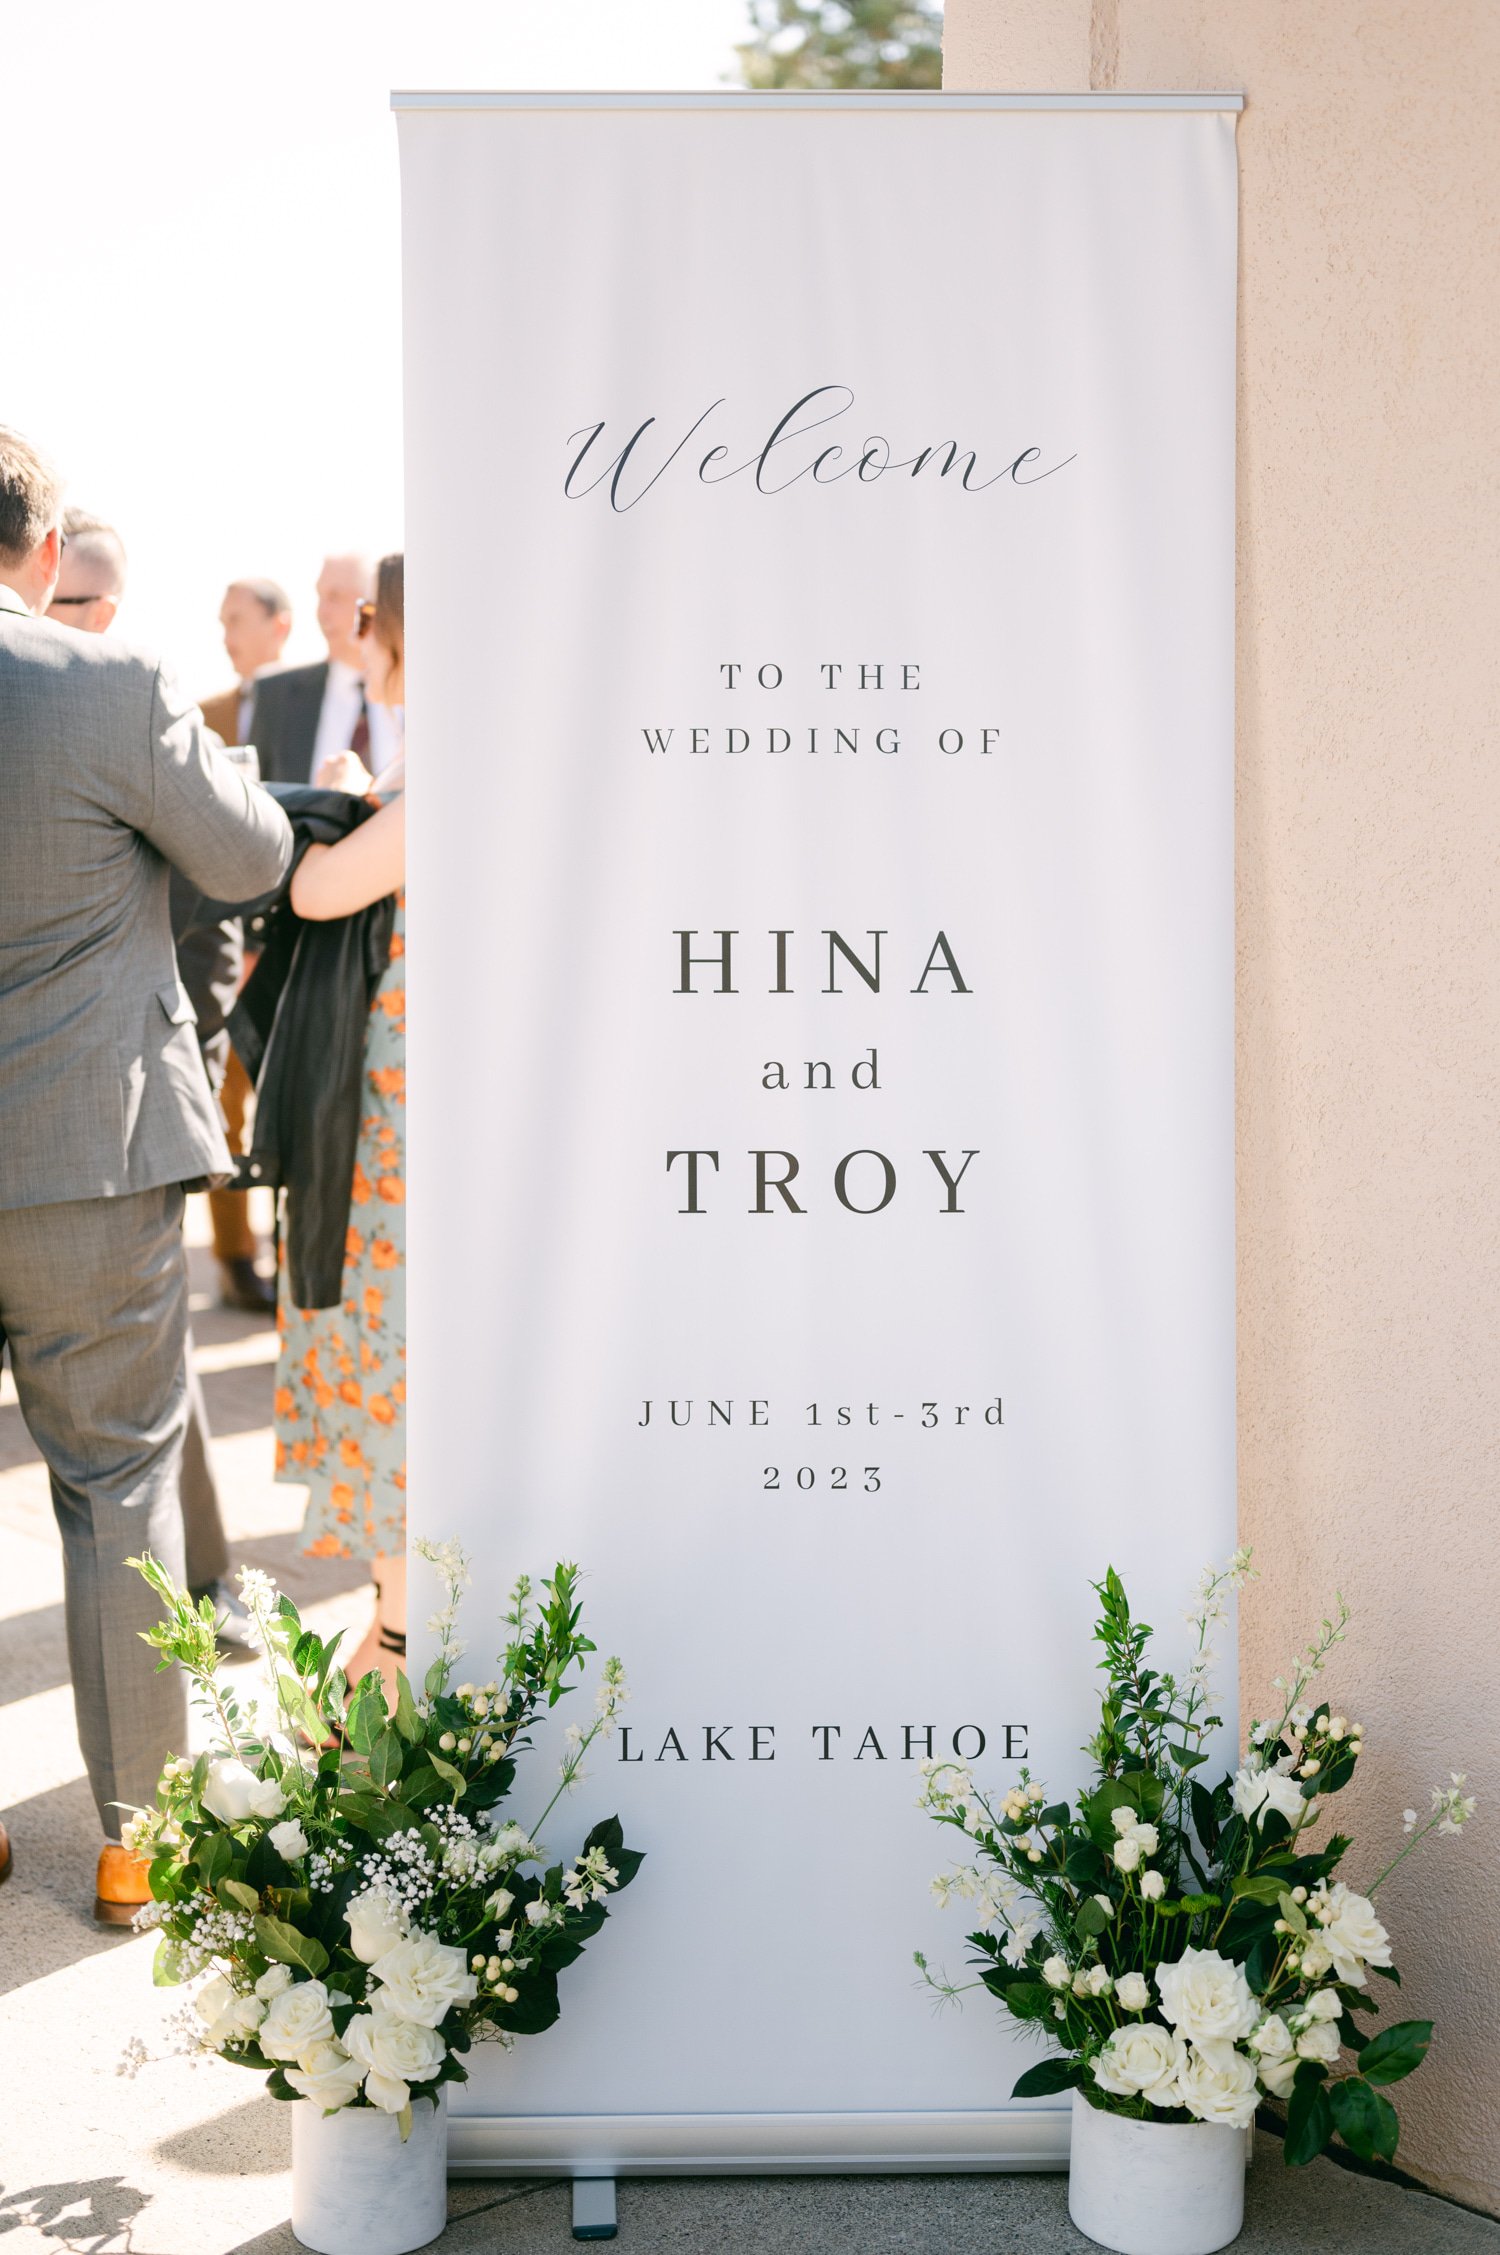 tahoe event center - lake tahoe wedding, photo of the wedding signage